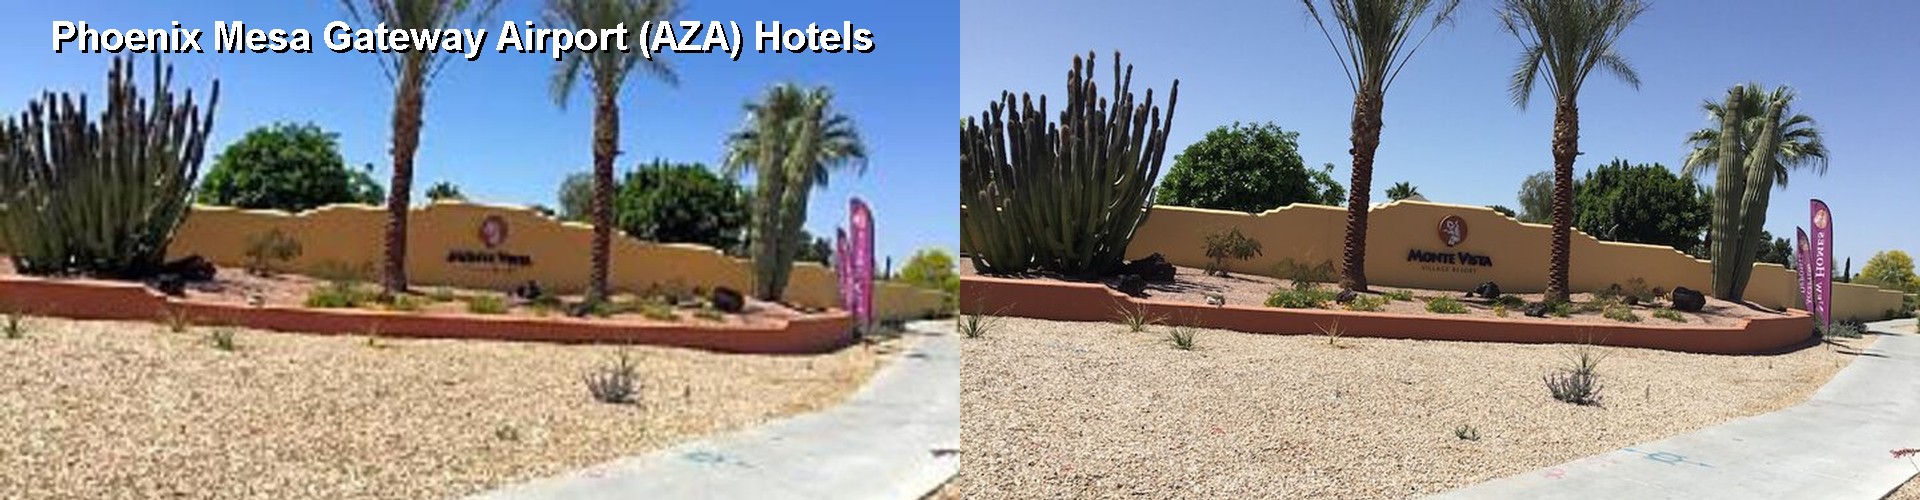 5 Best Hotels near Phoenix Mesa Gateway Airport (AZA)